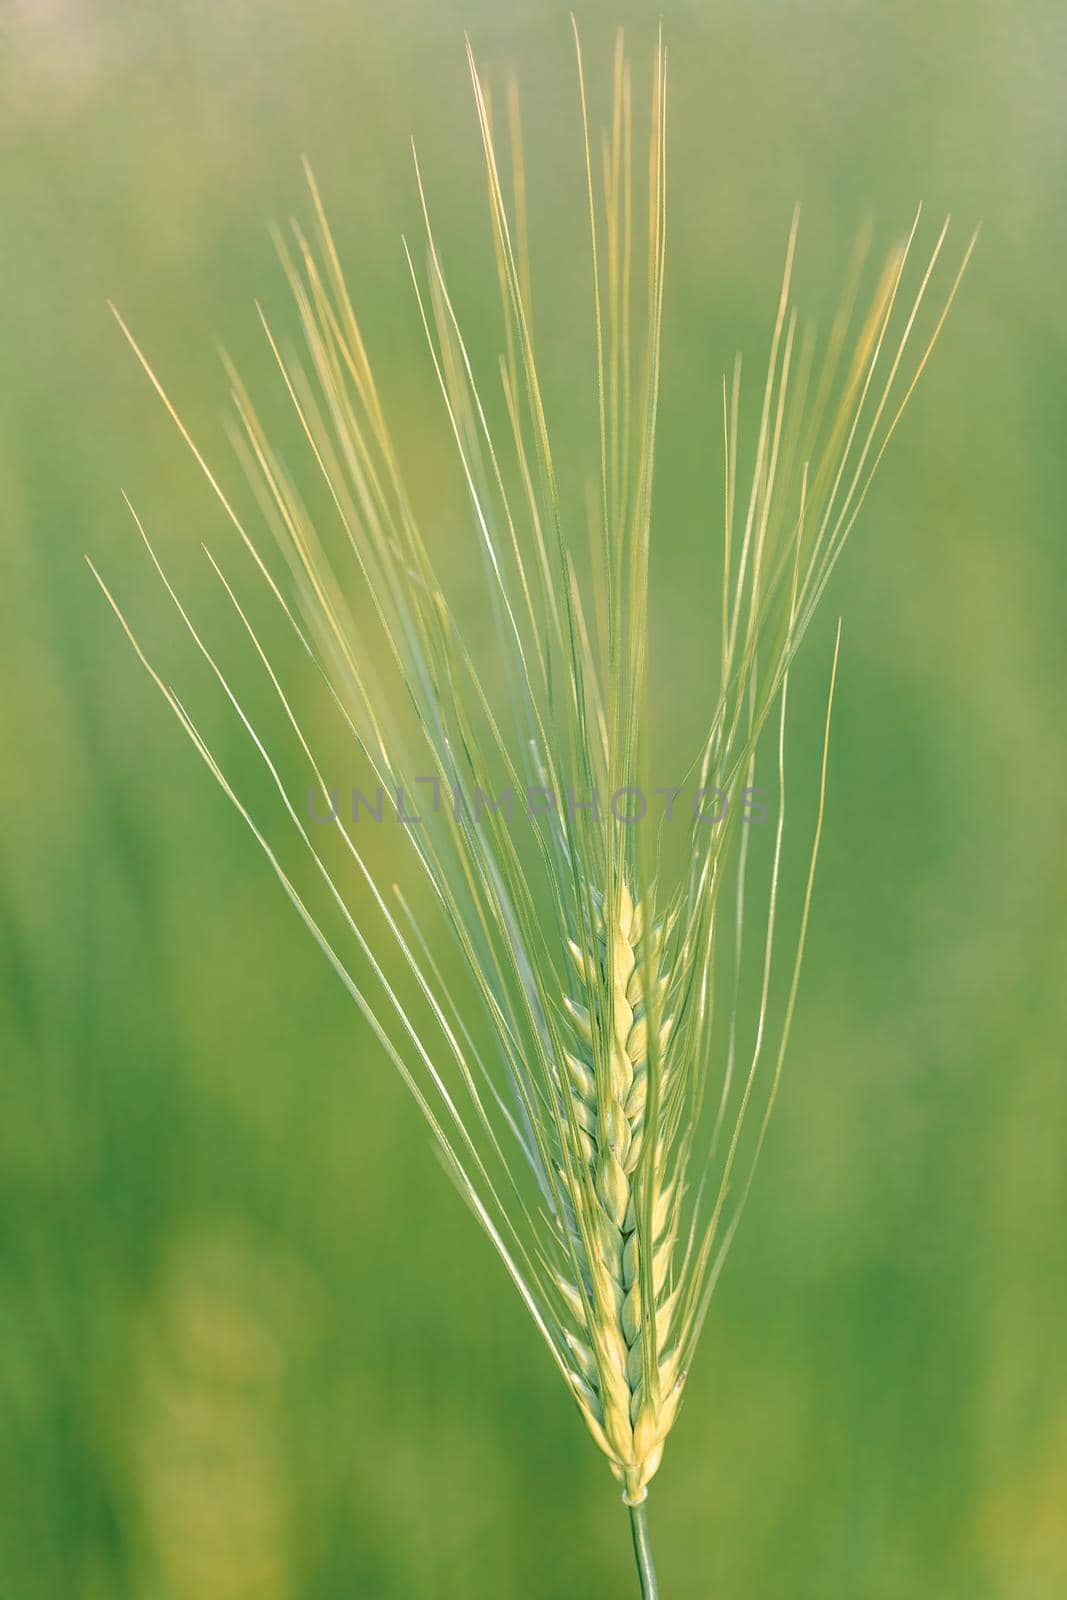 Ear of barley lit by sunlight by artush